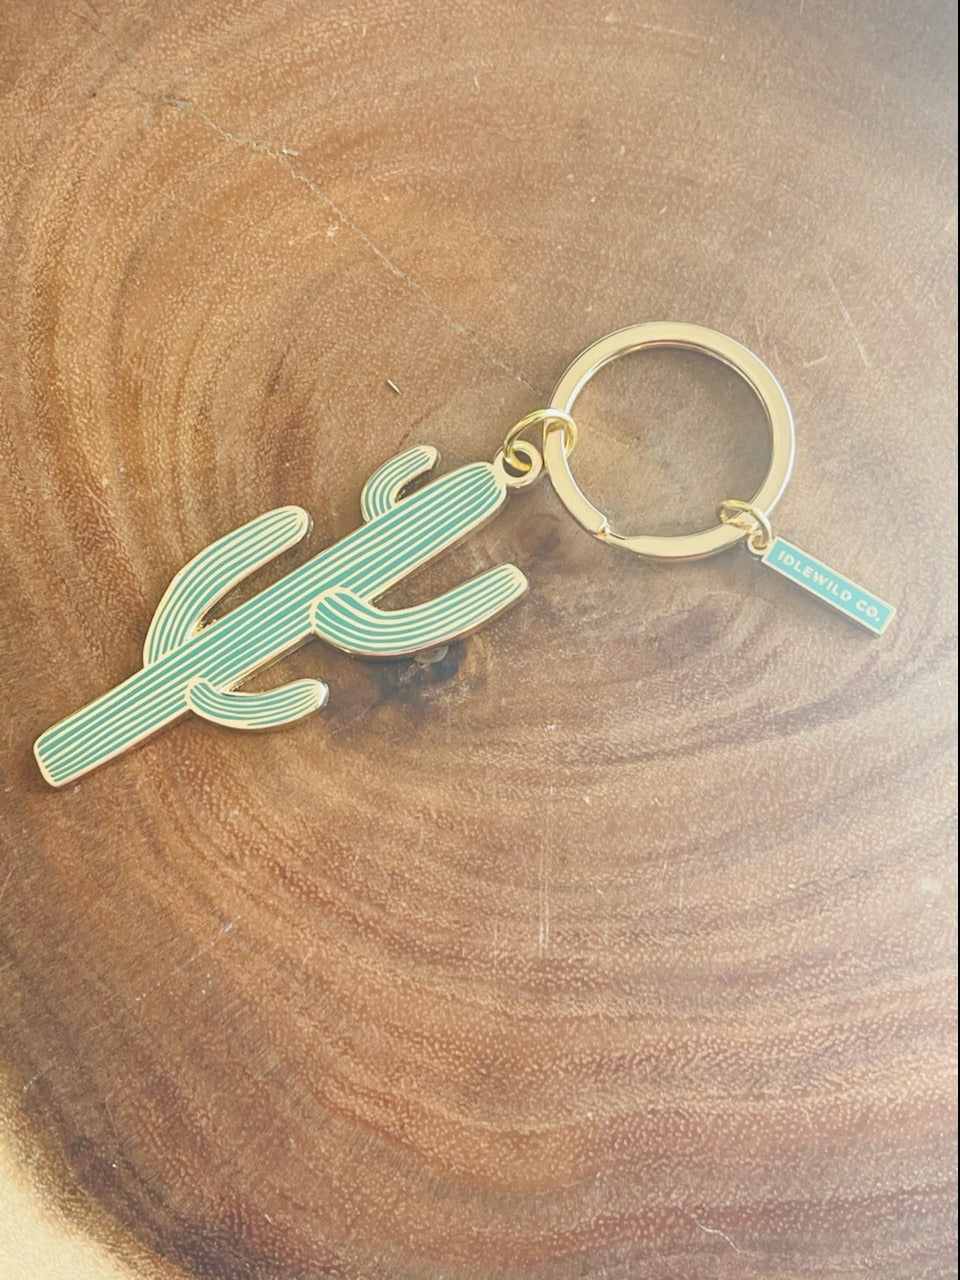 Handmade Idlewild Co Saguaro Key Chain